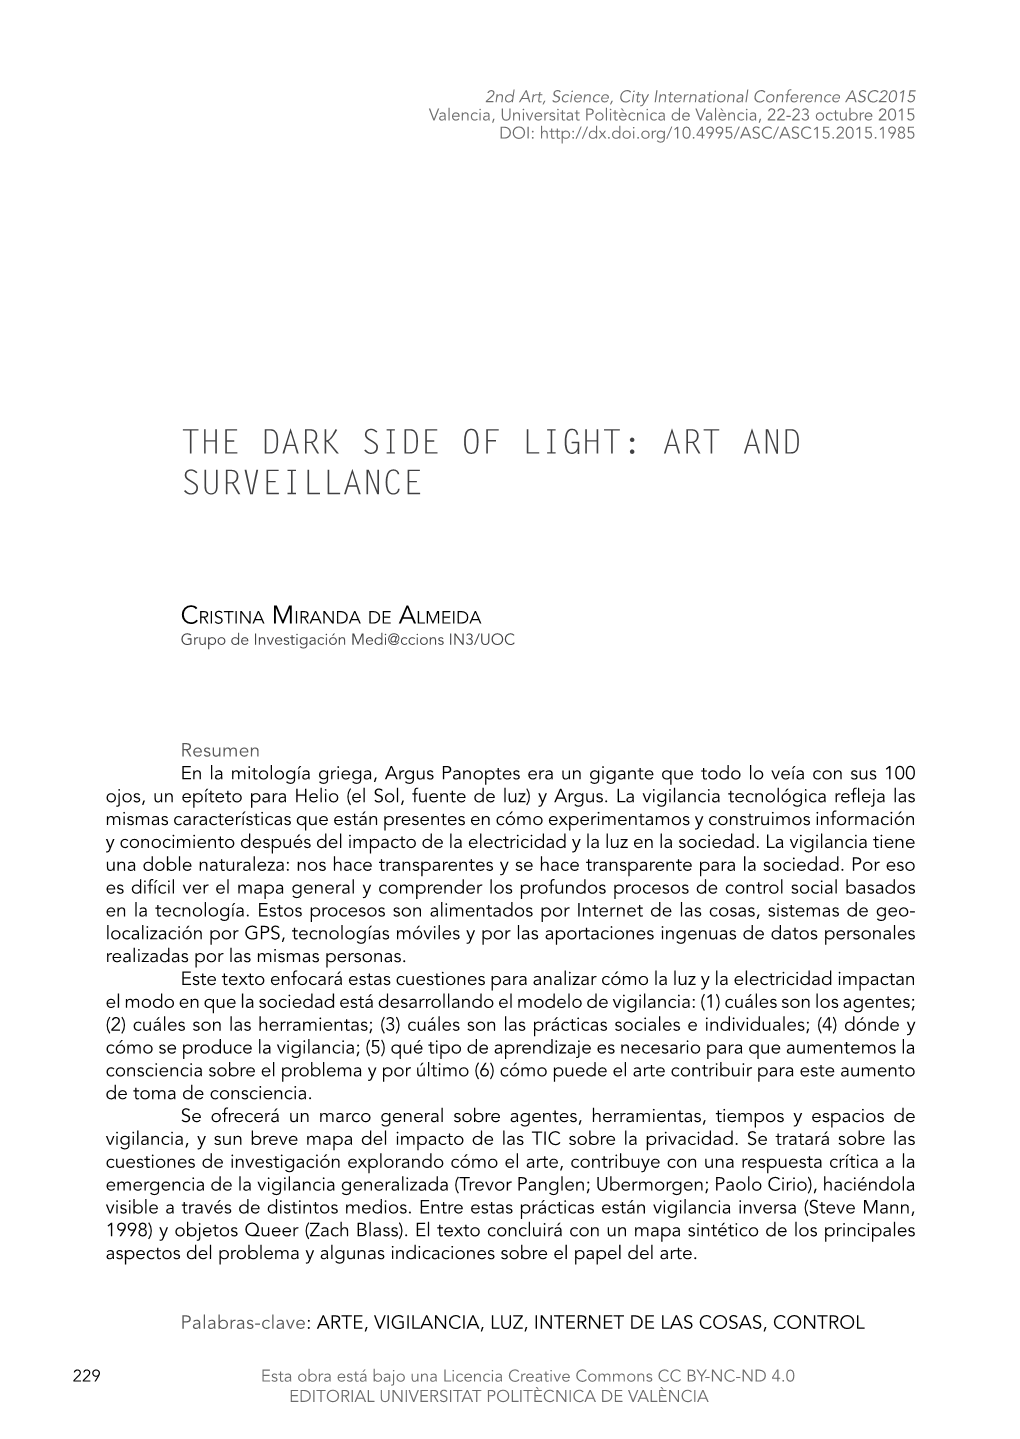 The Dark Side of Light: Art and Surveillance